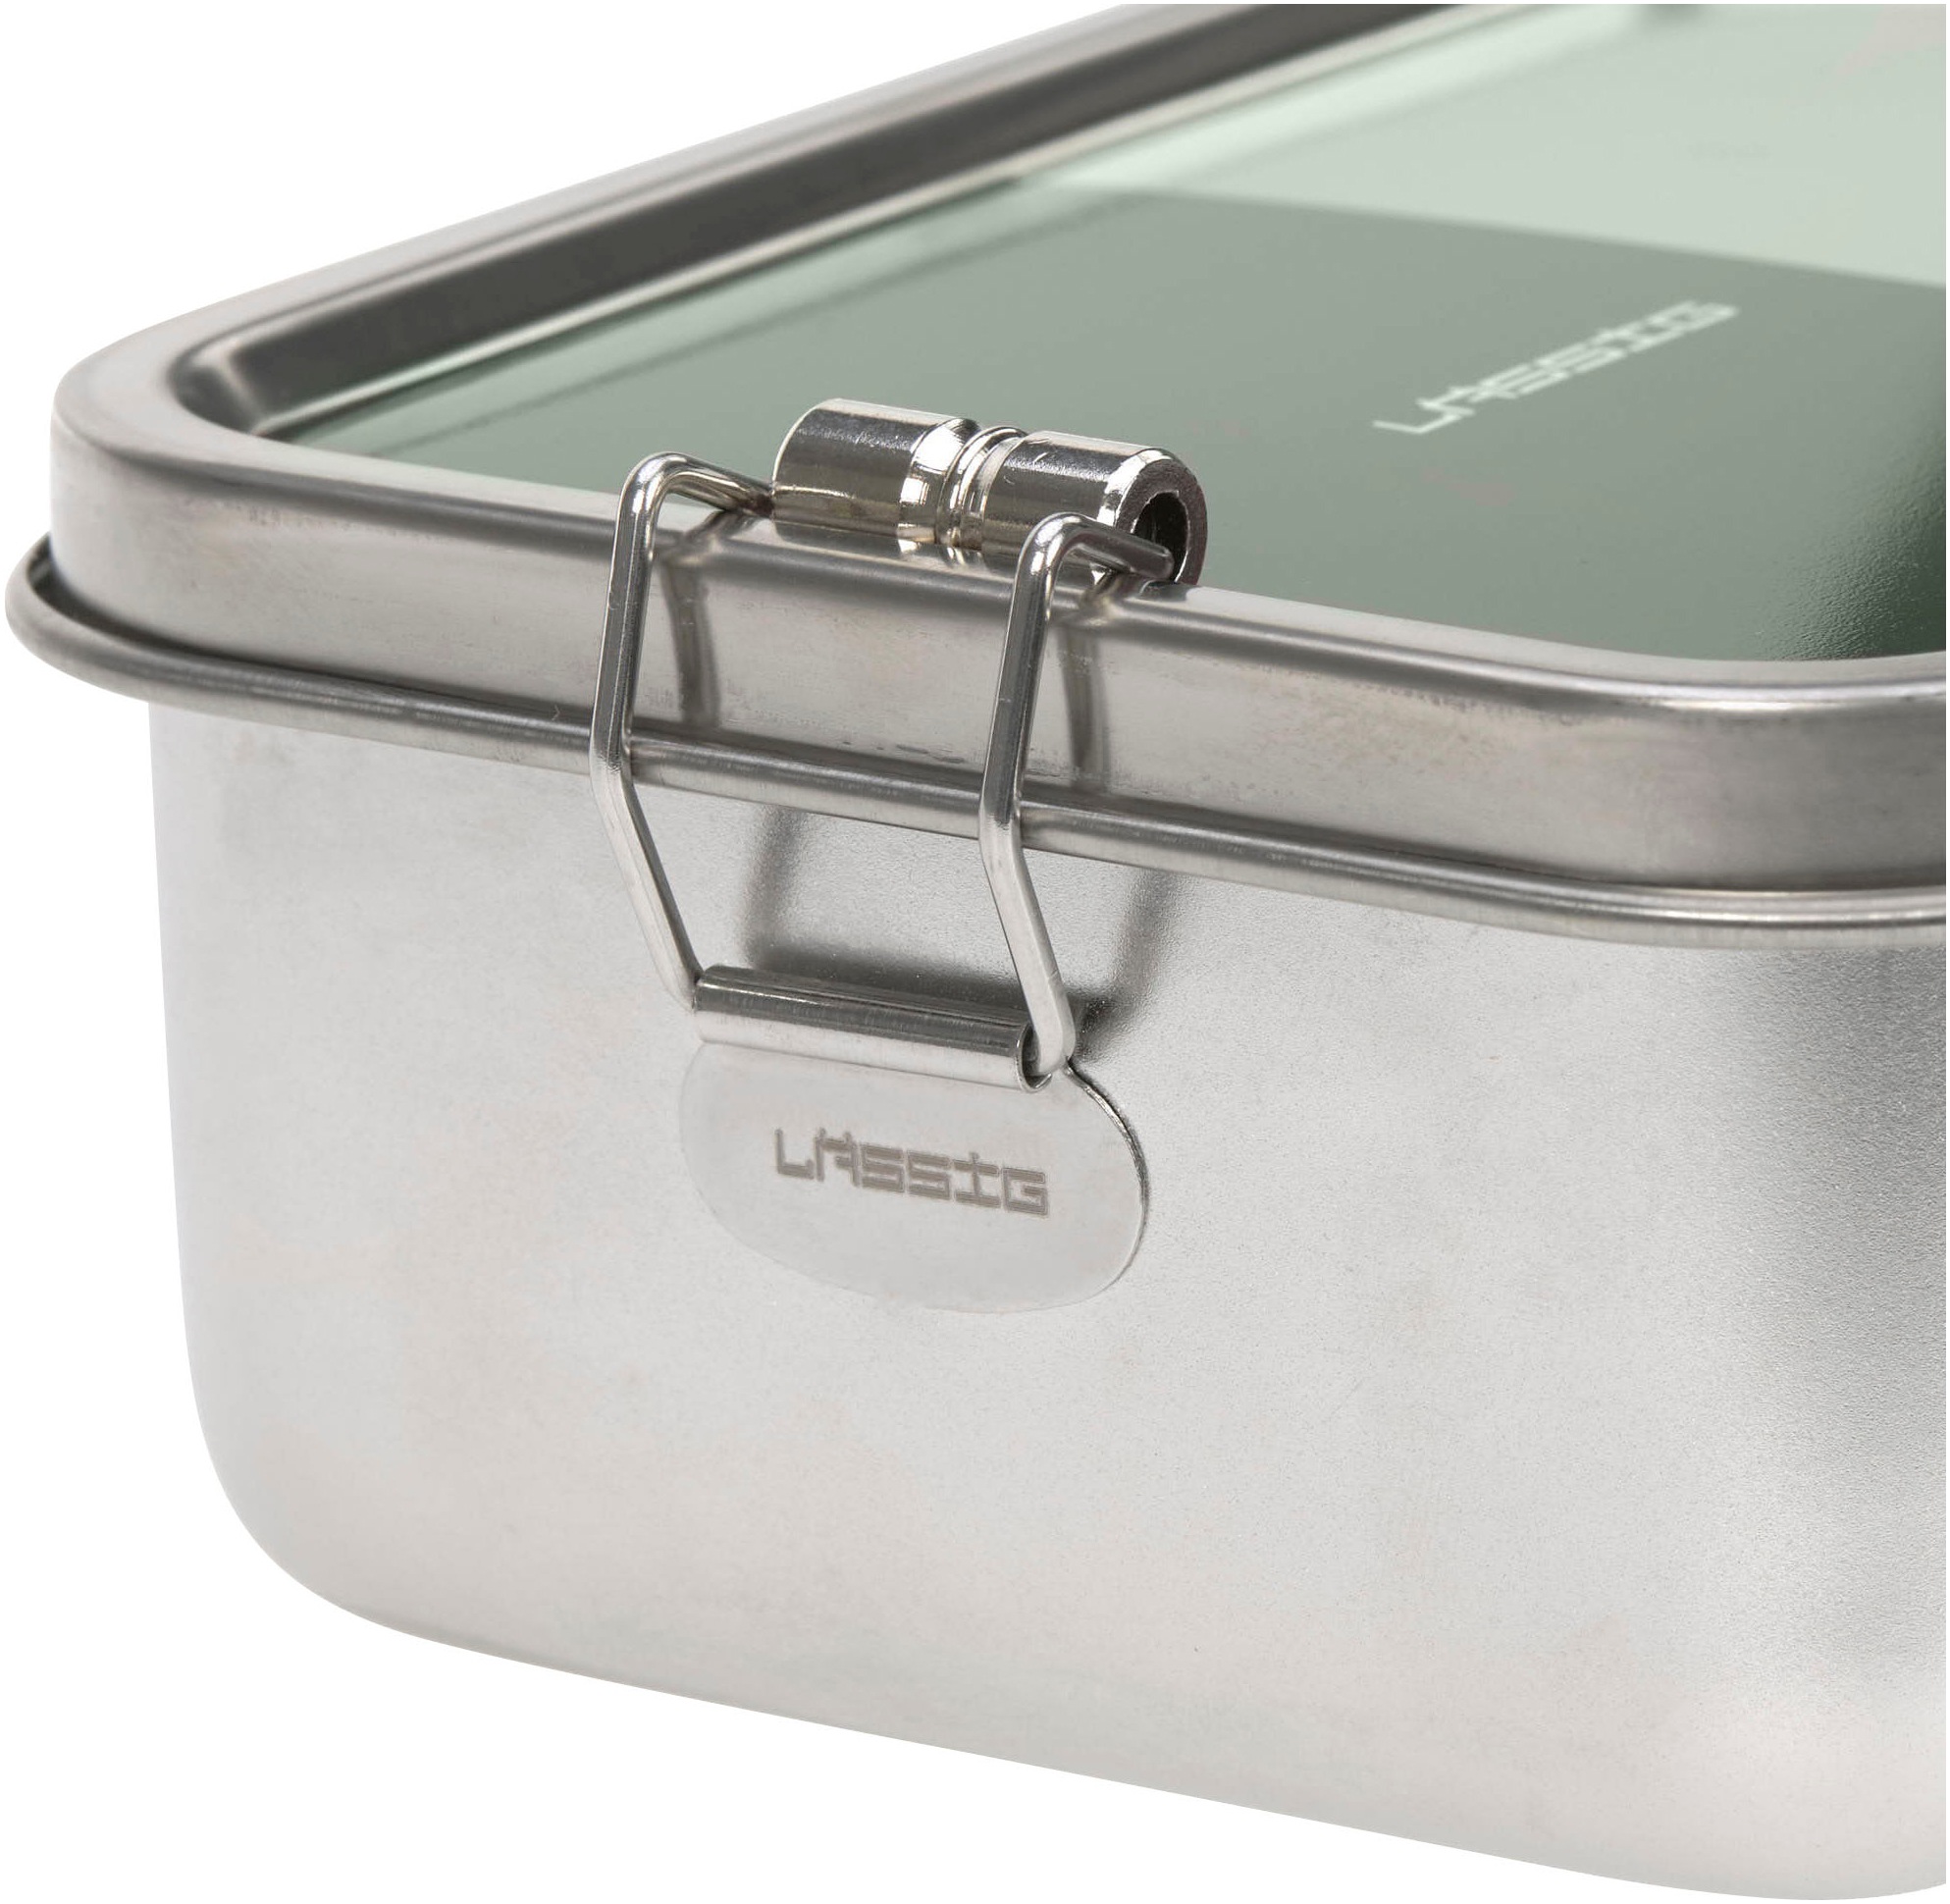 LÄSSIG Lunchbox »Solid, olive/green«, (1 tlg.), aus Edelstahl